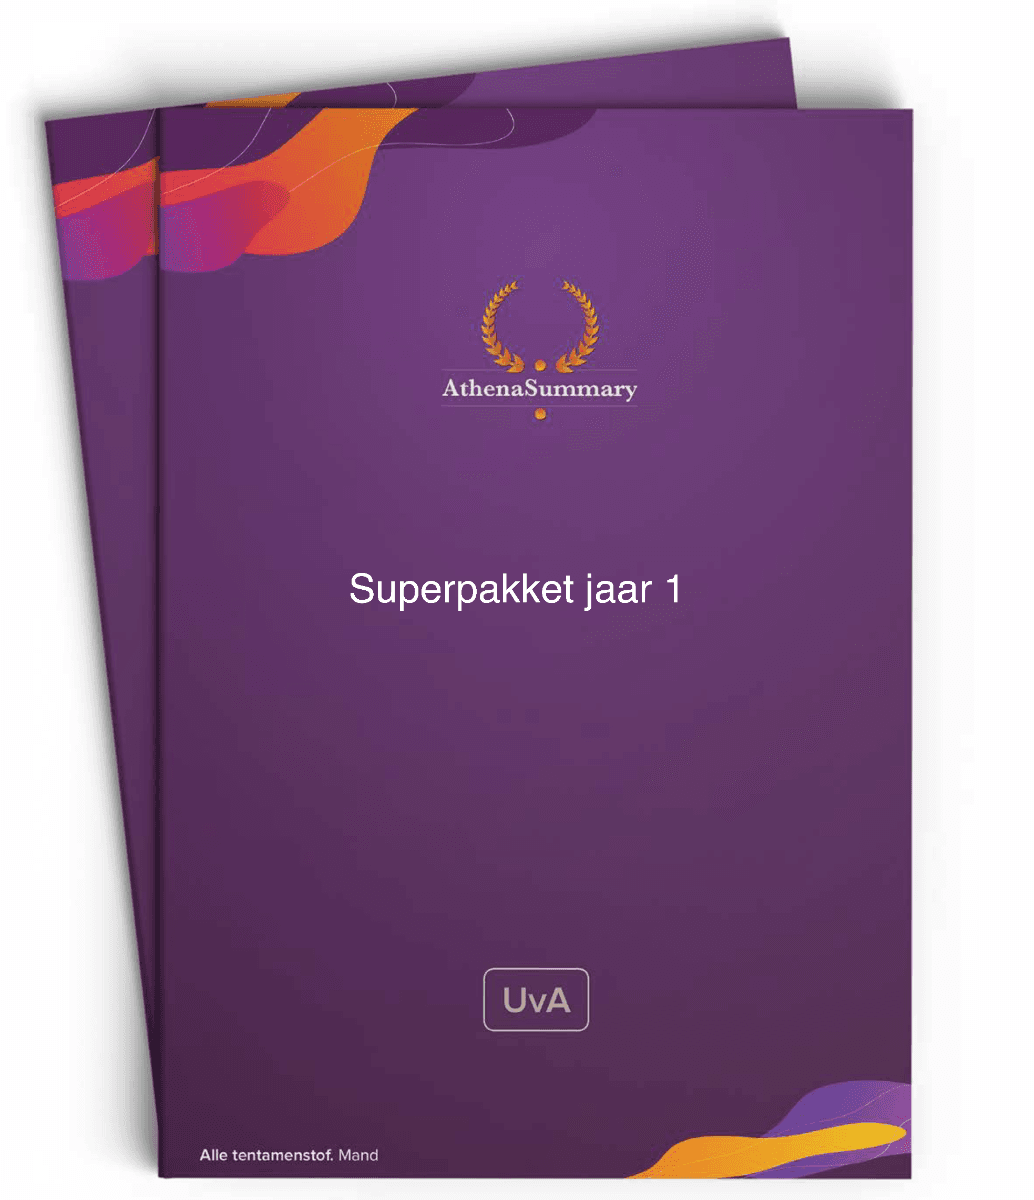 Superpakket jaar 1 